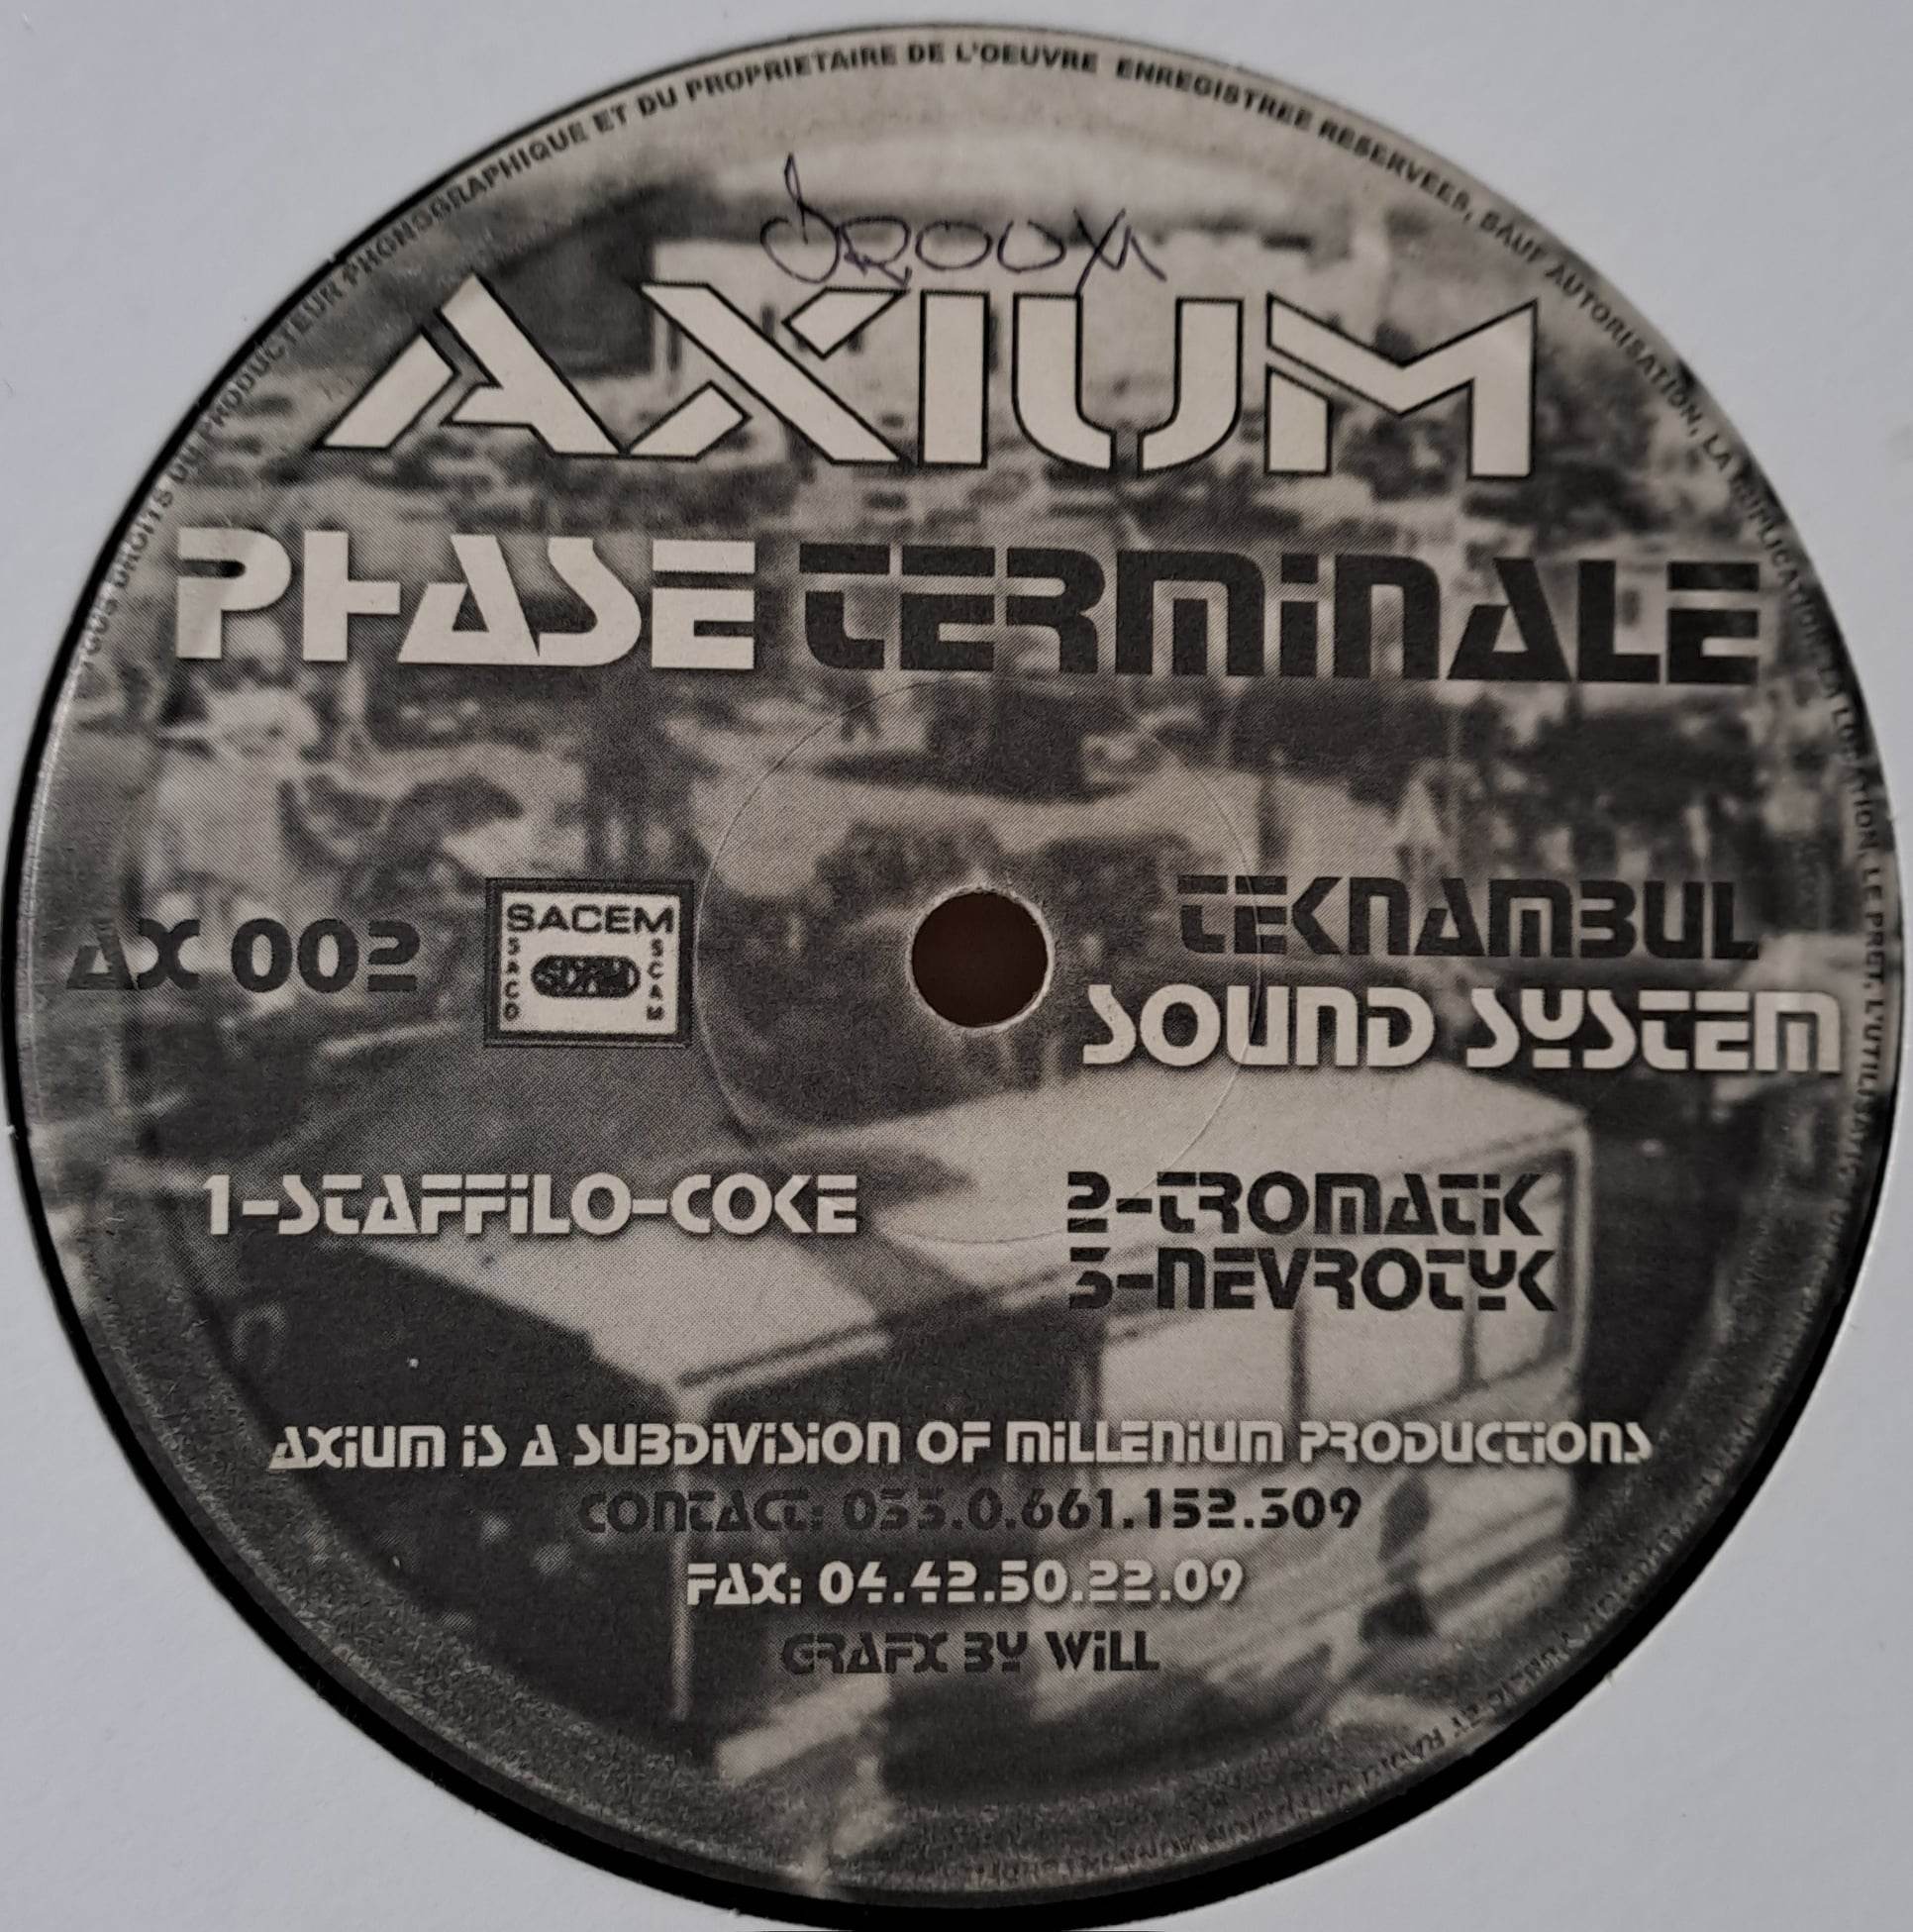 1) Axium 02 - vinyle freetekno